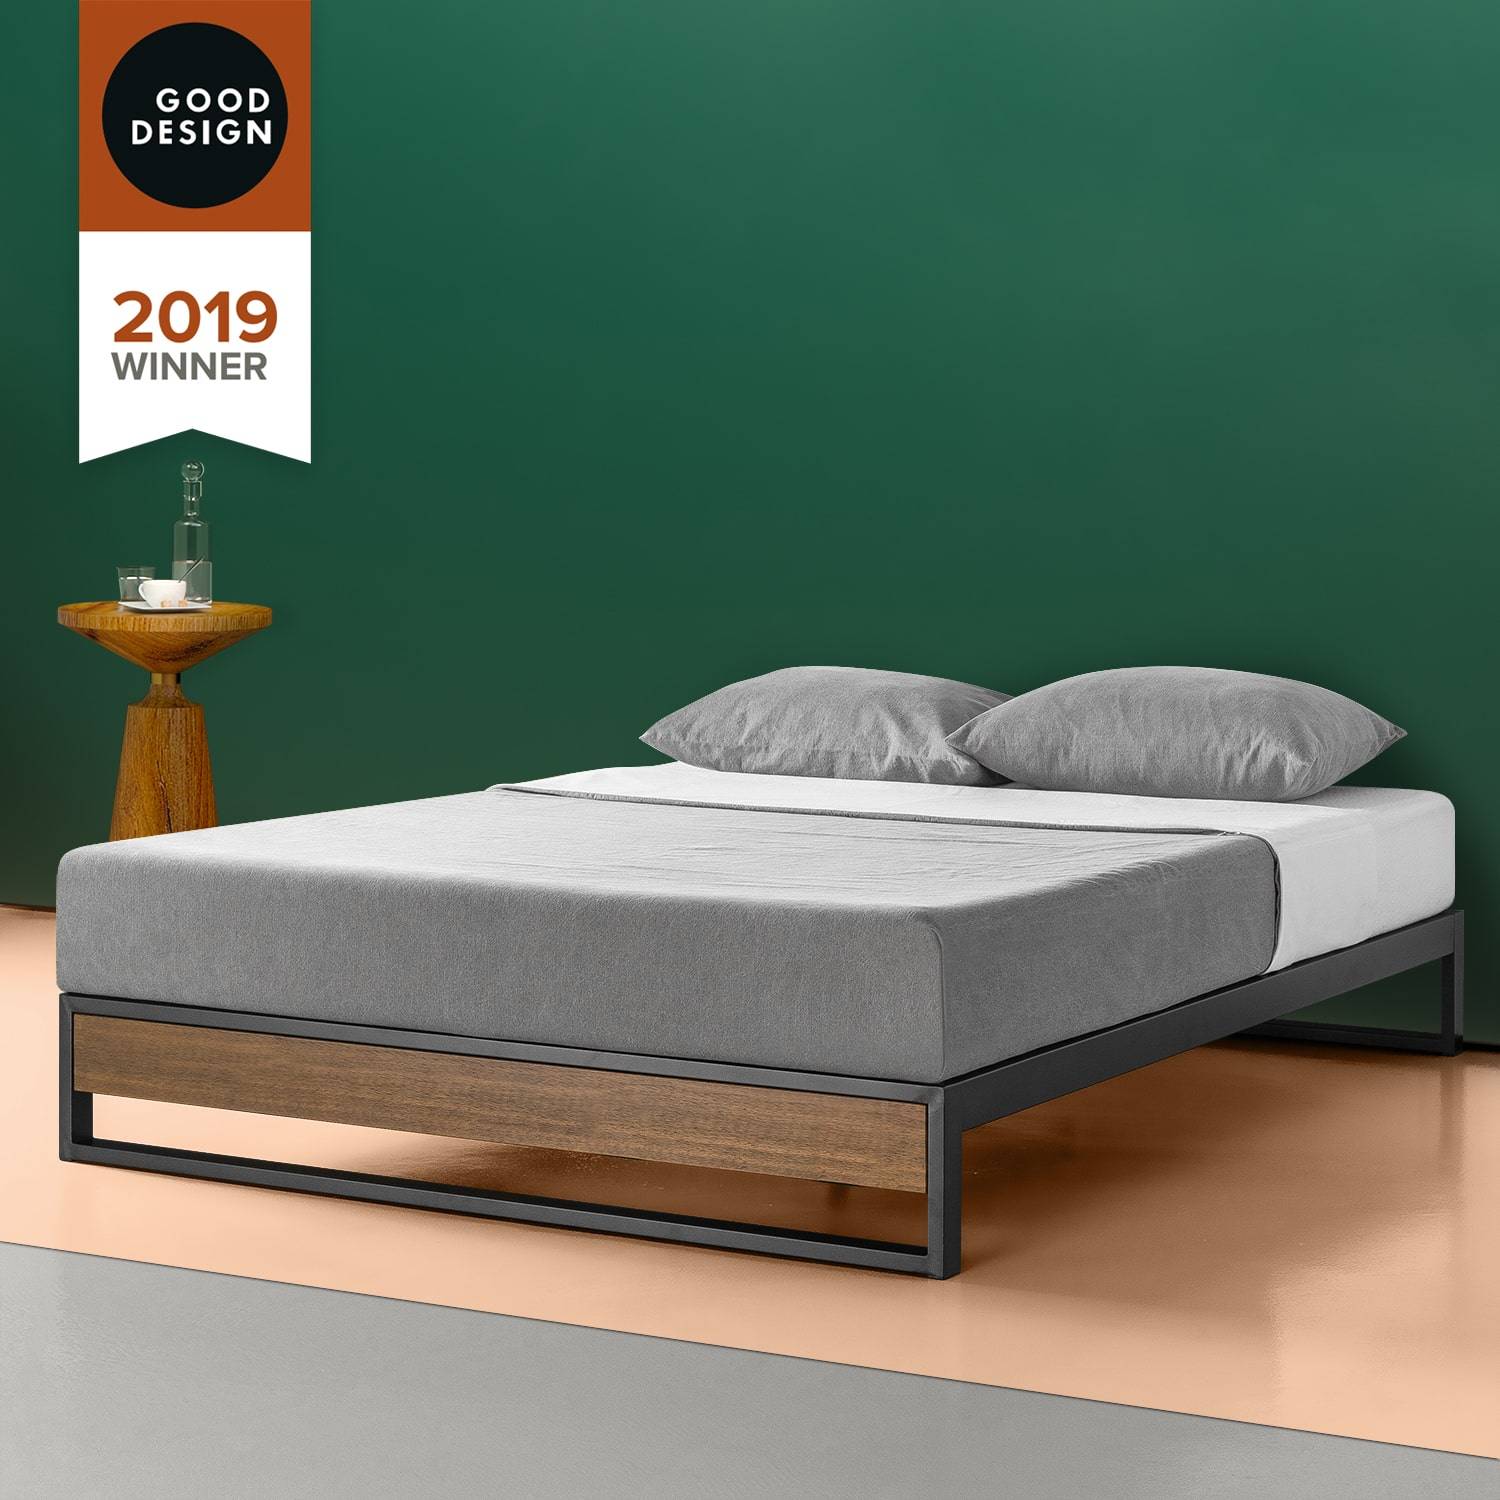 Honoring Excellent Design: The Zinus 2019 GOOD DESIGN® Award Winners